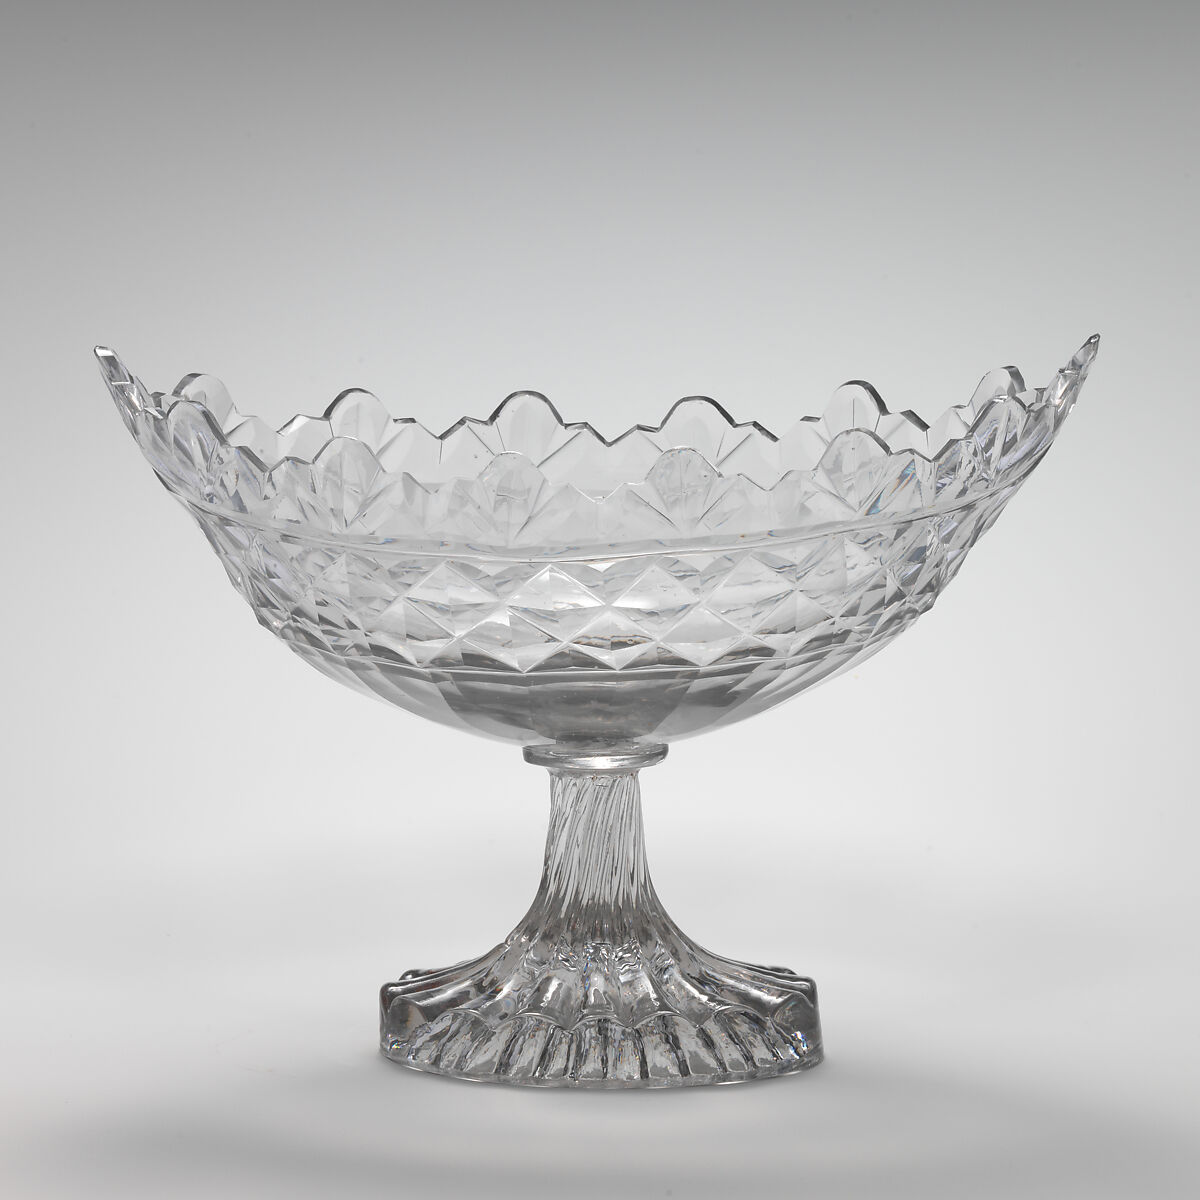 Fruit bowl, Glass, Continental European 